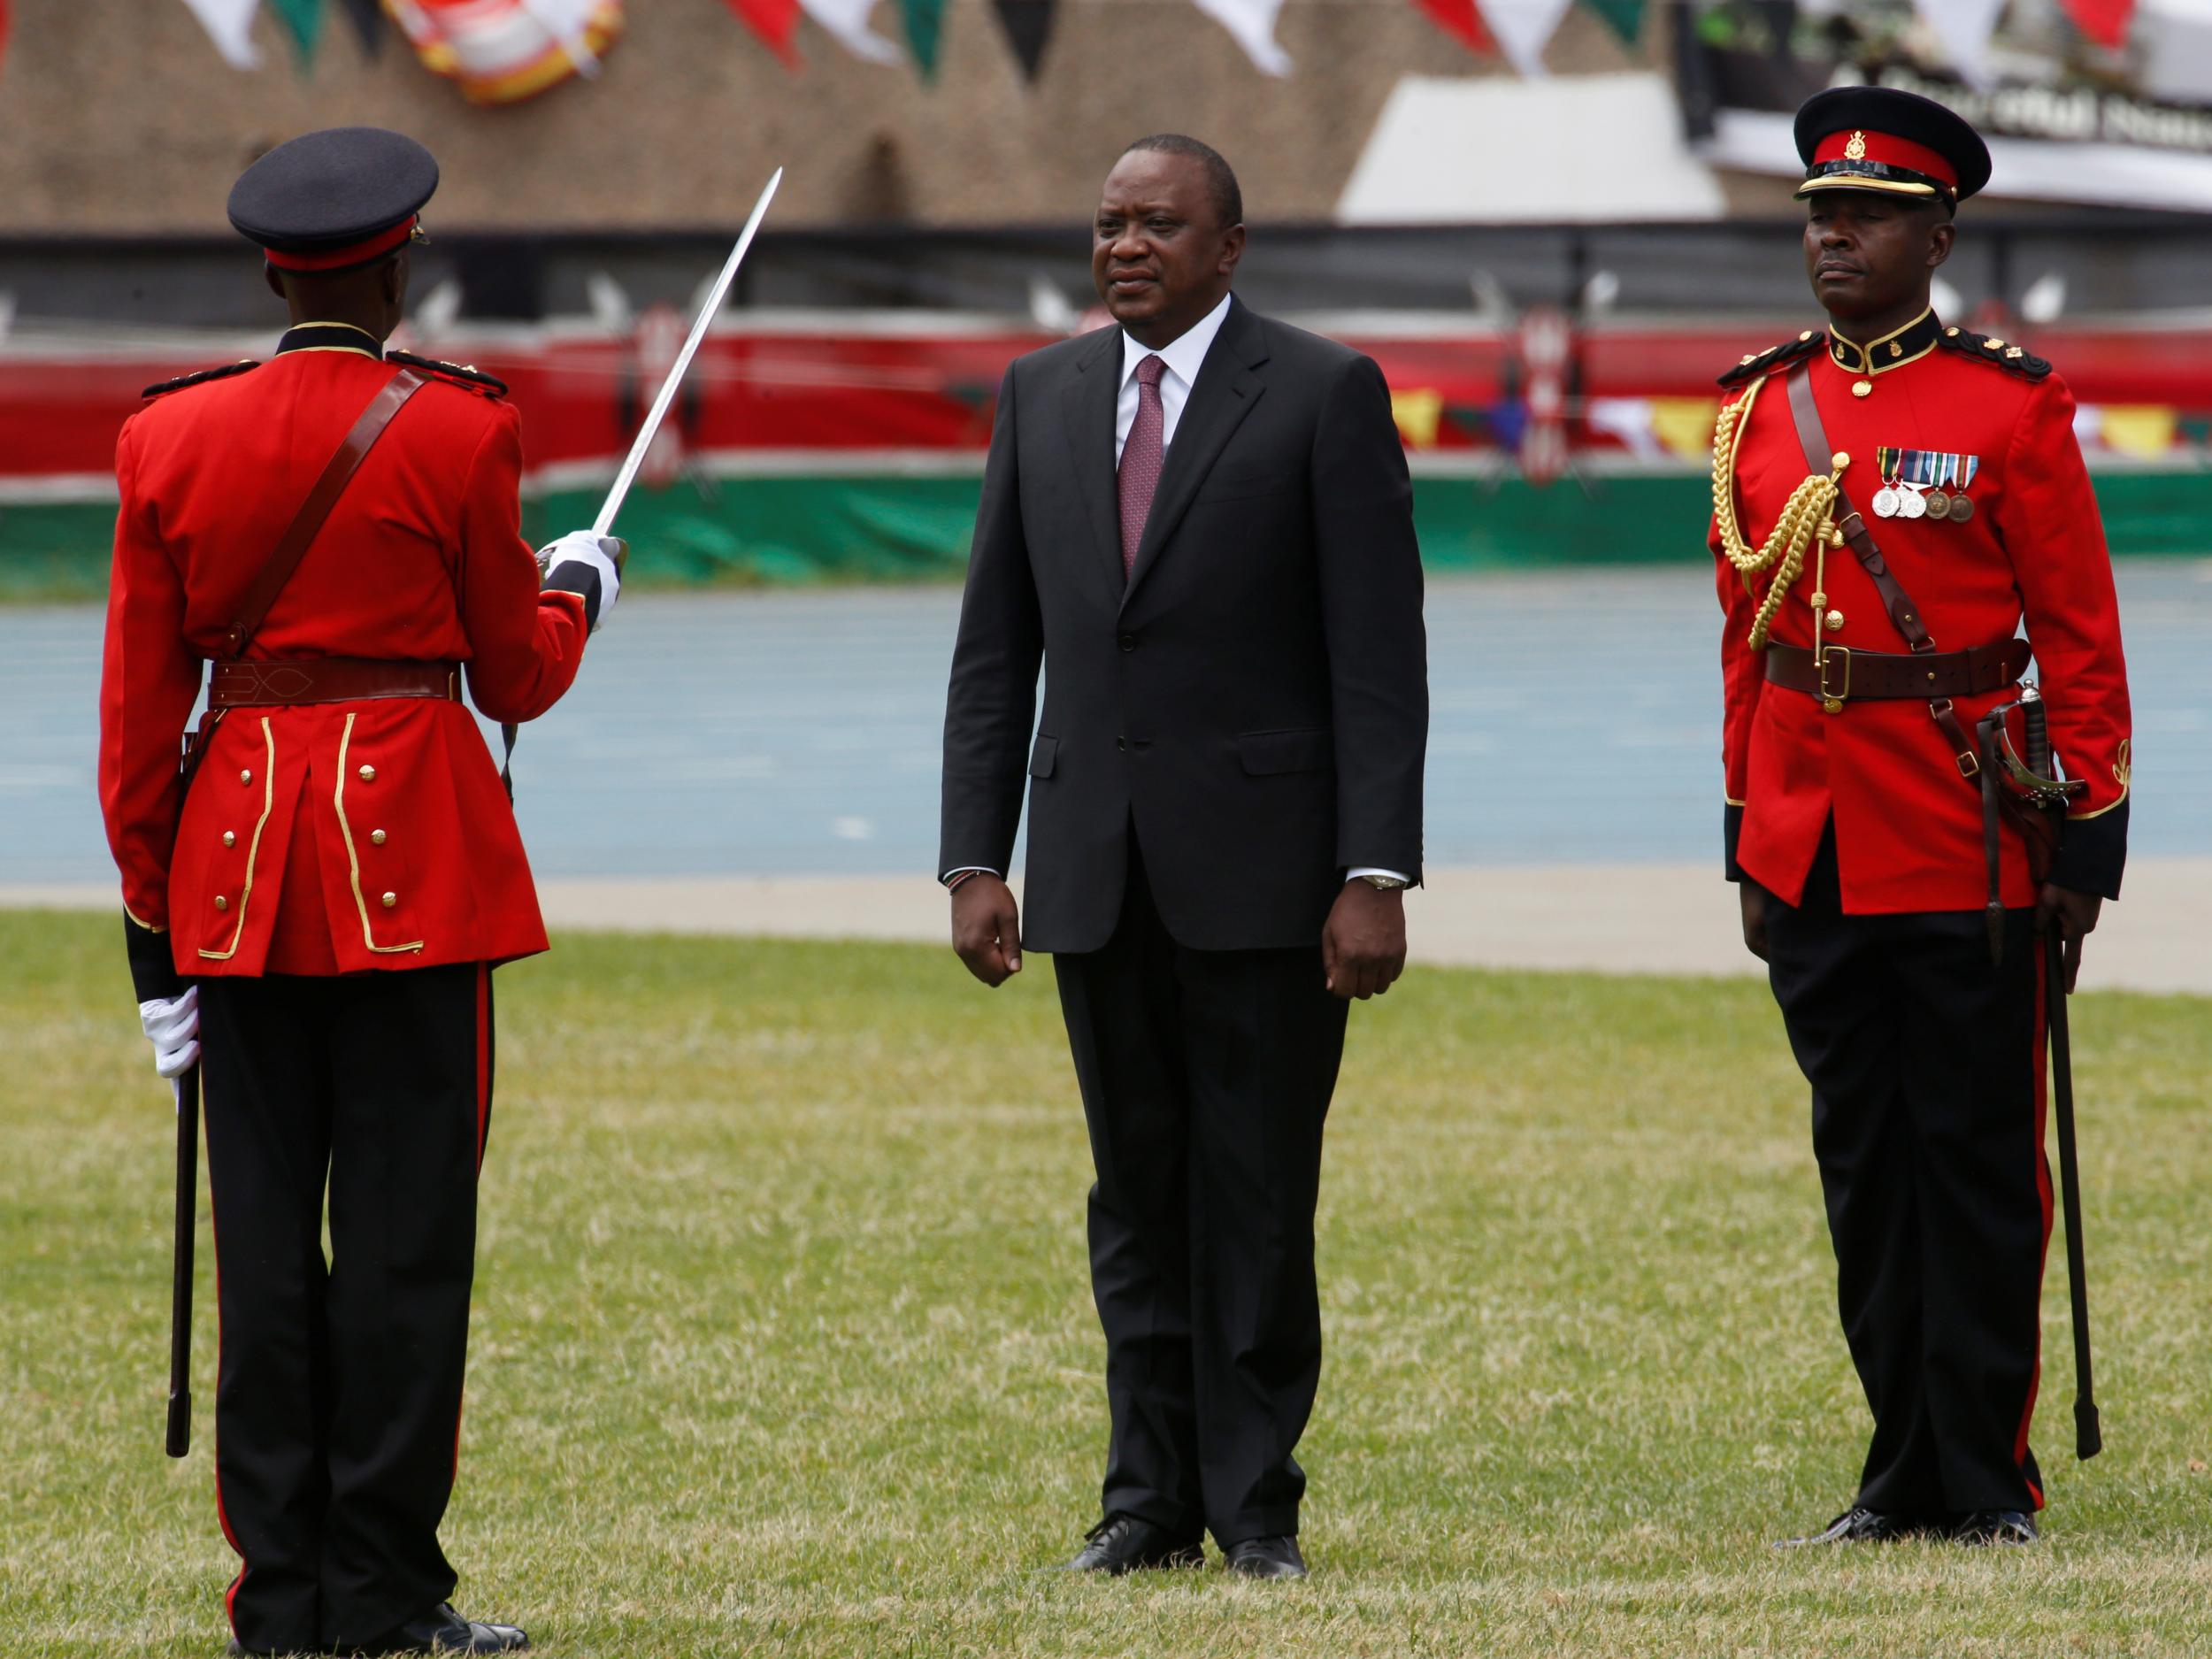 KENYA: PRESIDENT KENYATTA DIRECTS KENYAN EMBASSIES TO ISSUE VISAS AT POINTS OF ENTRY